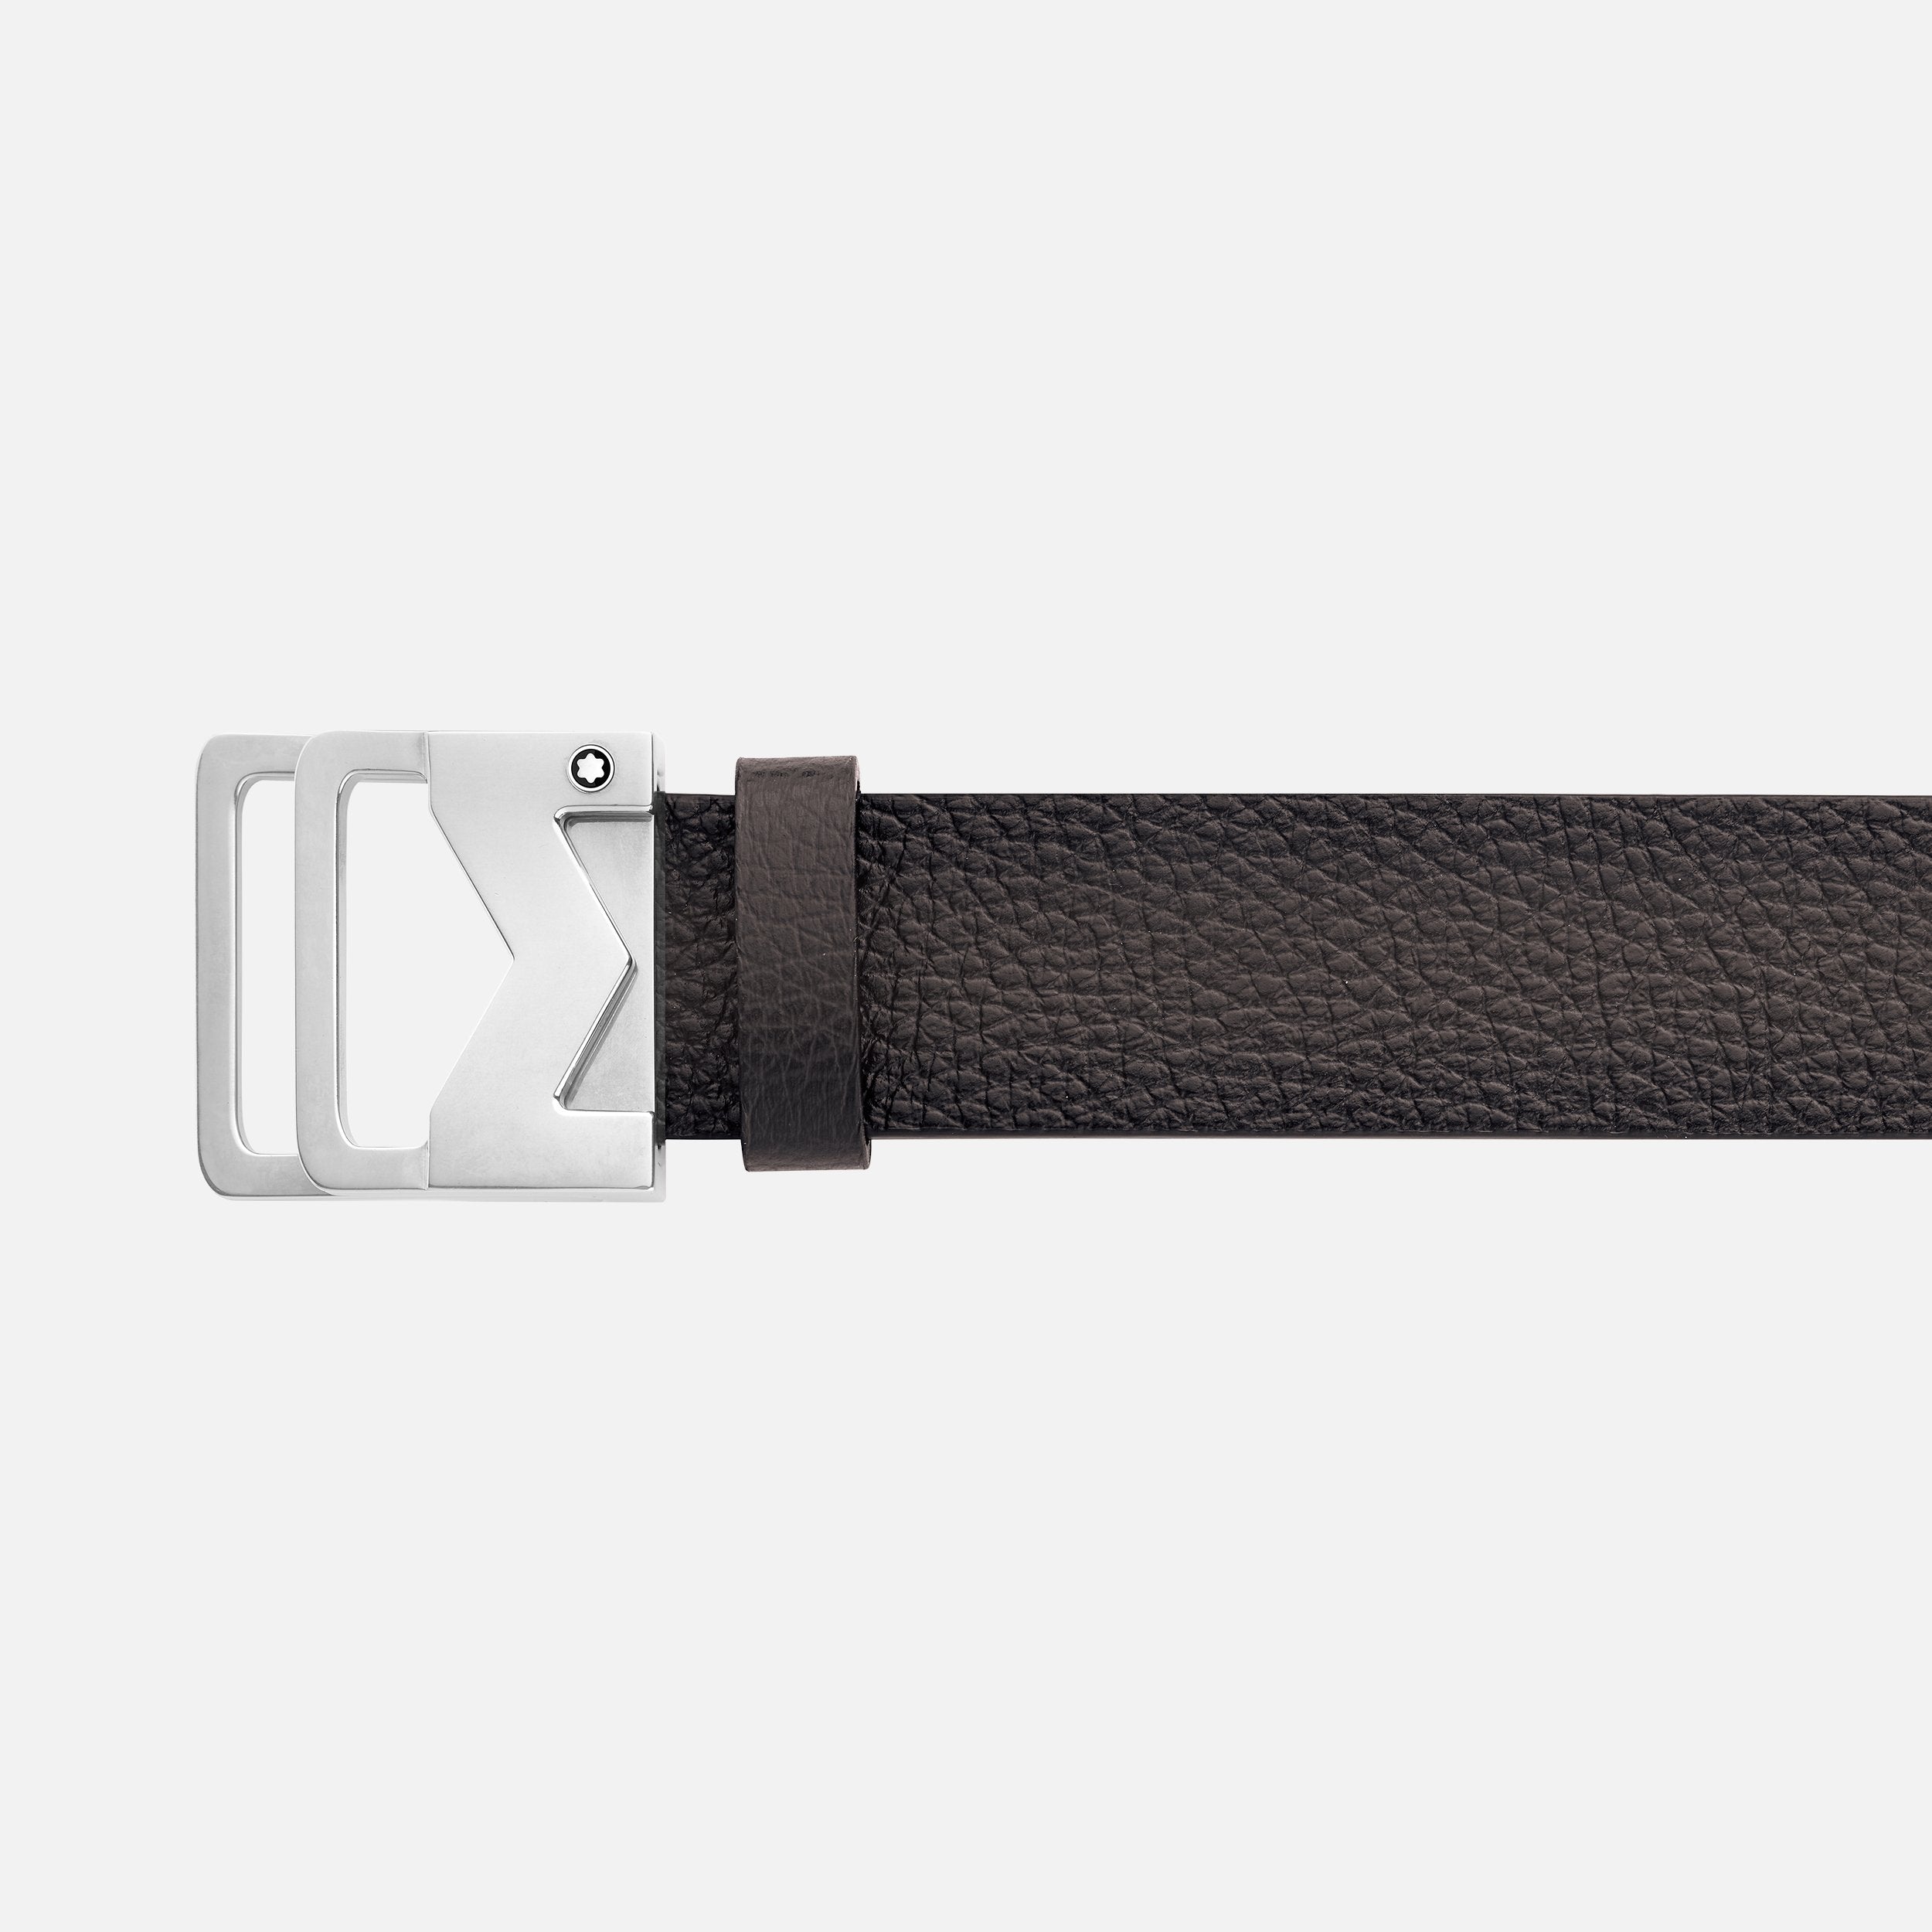 Horseshoe buckle printed black 40 mm leather belt